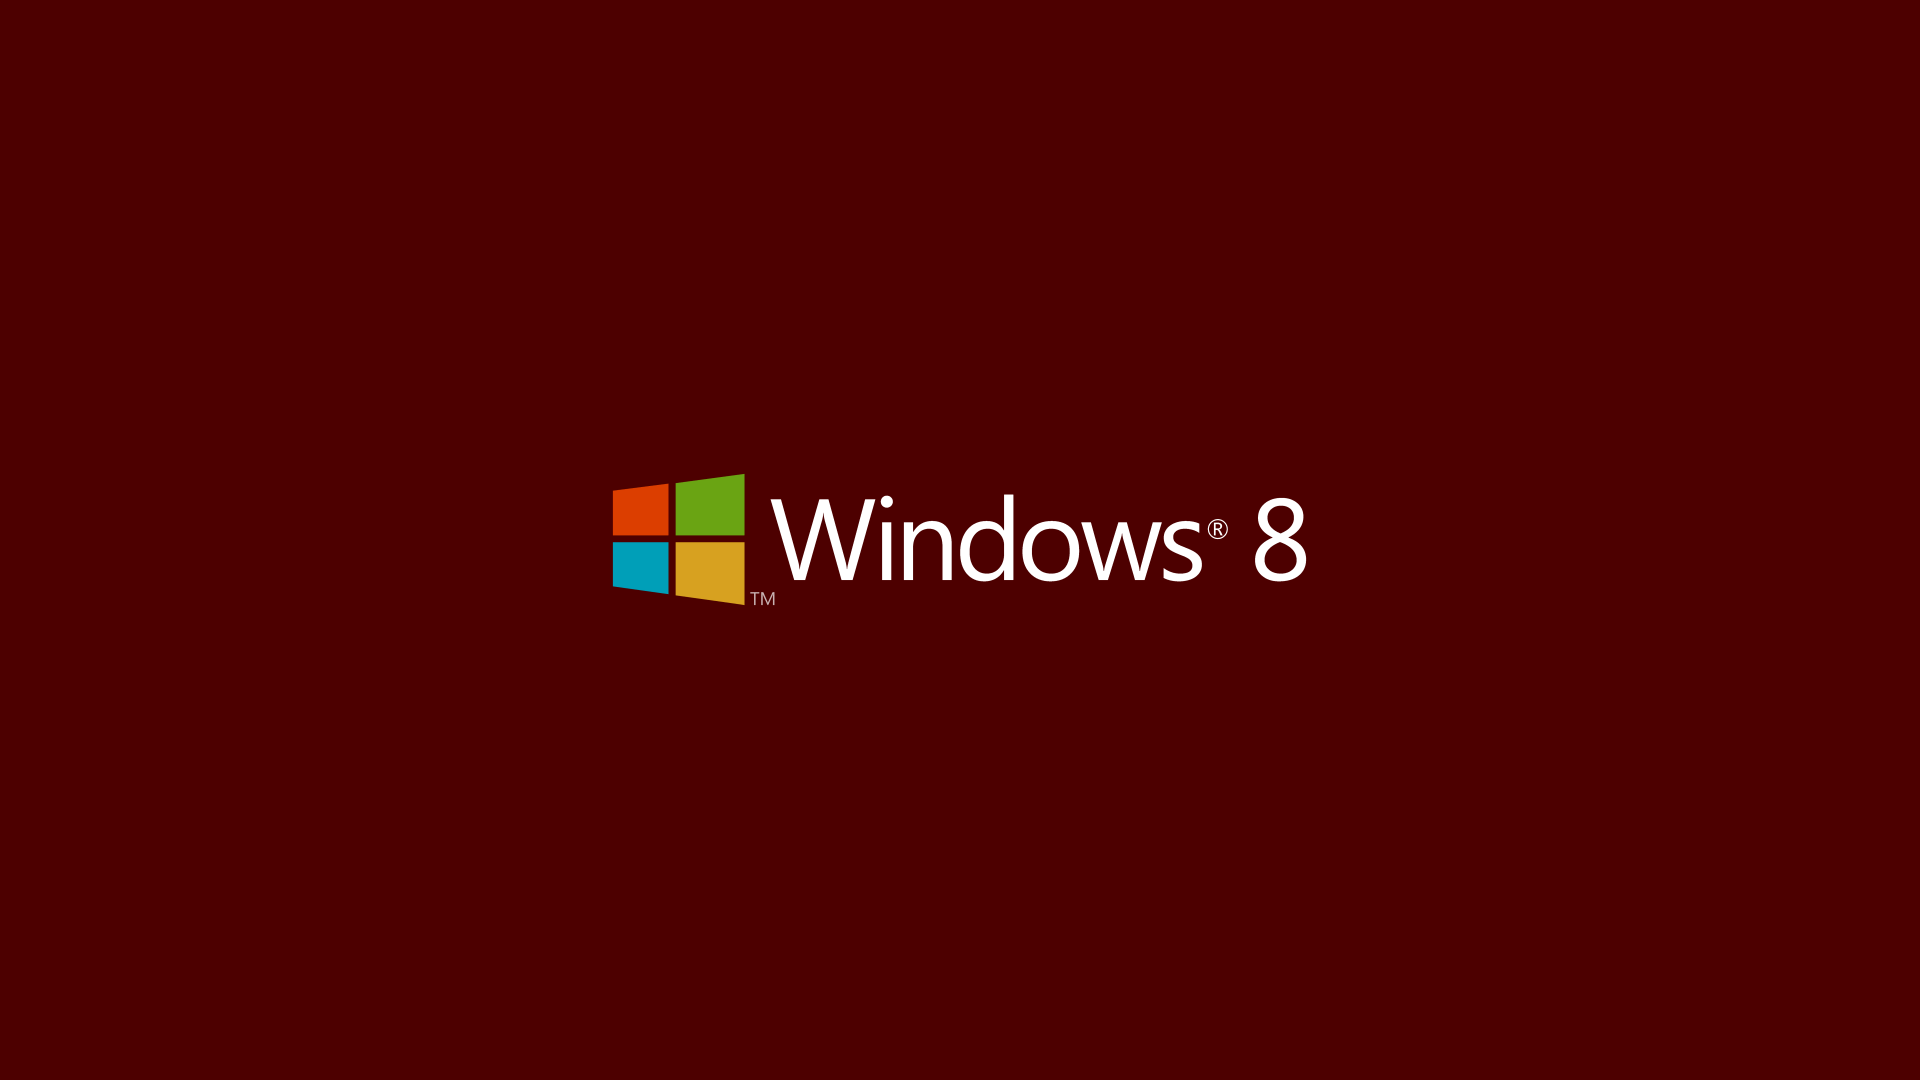 Microsoft Windows Wallpaper 1920x1080 Microsoft Windows 8